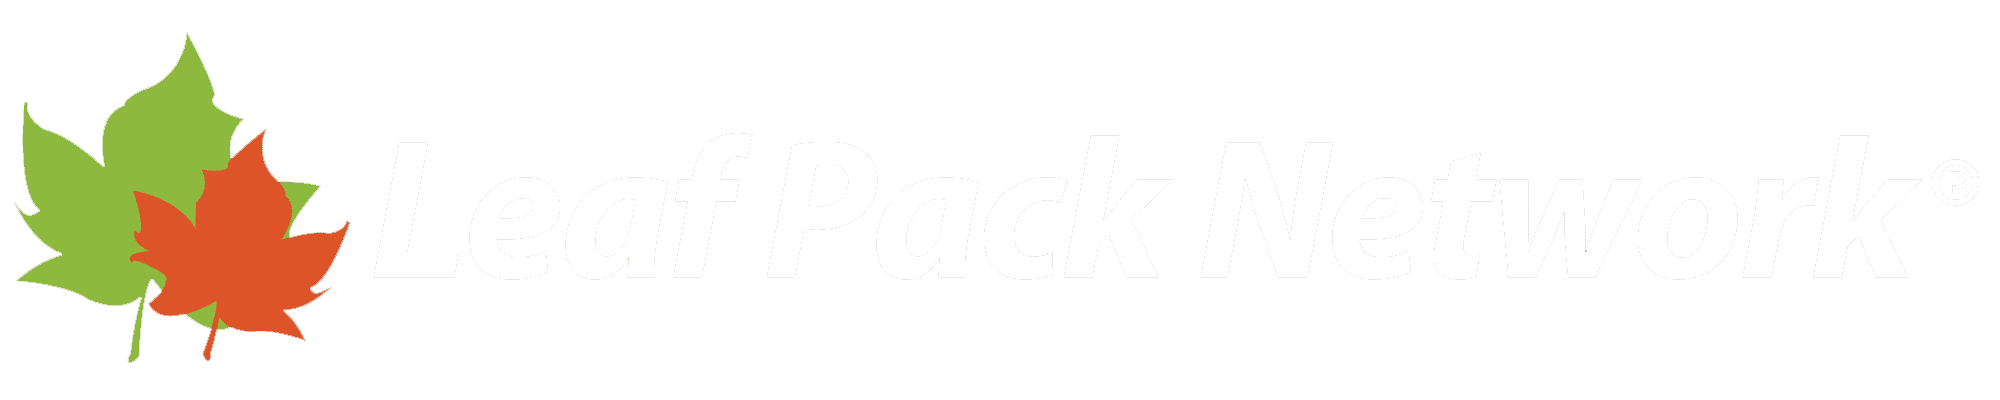 Leaf Pack Network